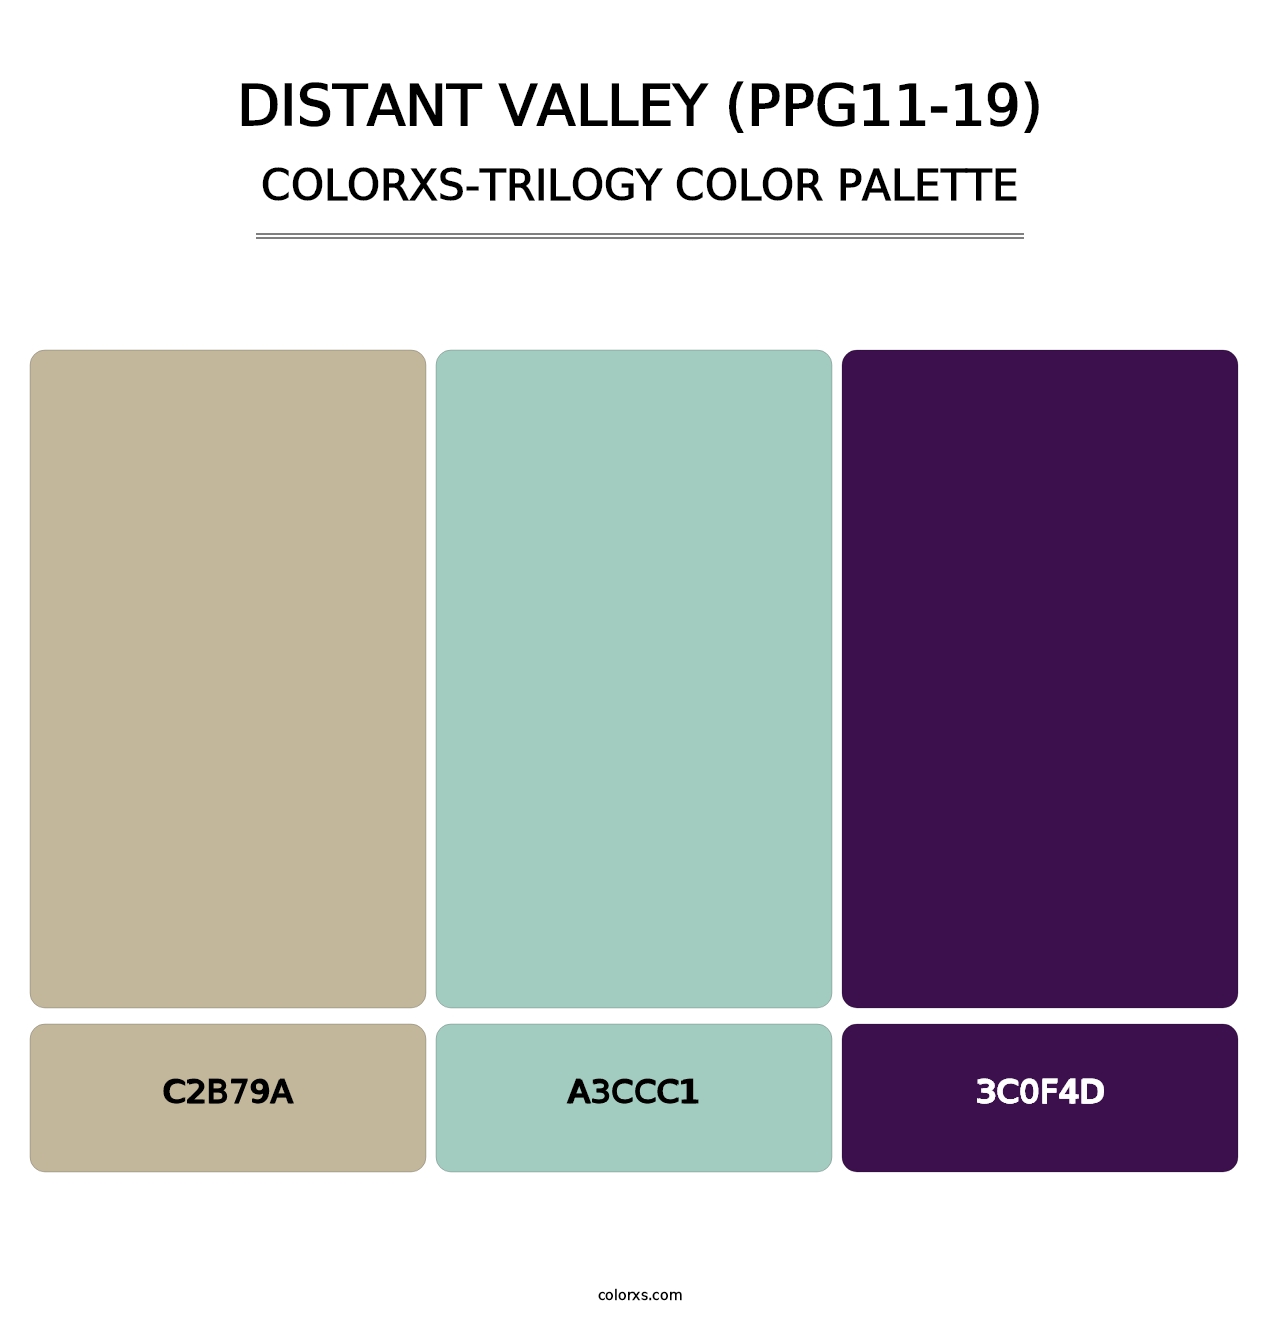 Distant Valley (PPG11-19) - Colorxs Trilogy Palette